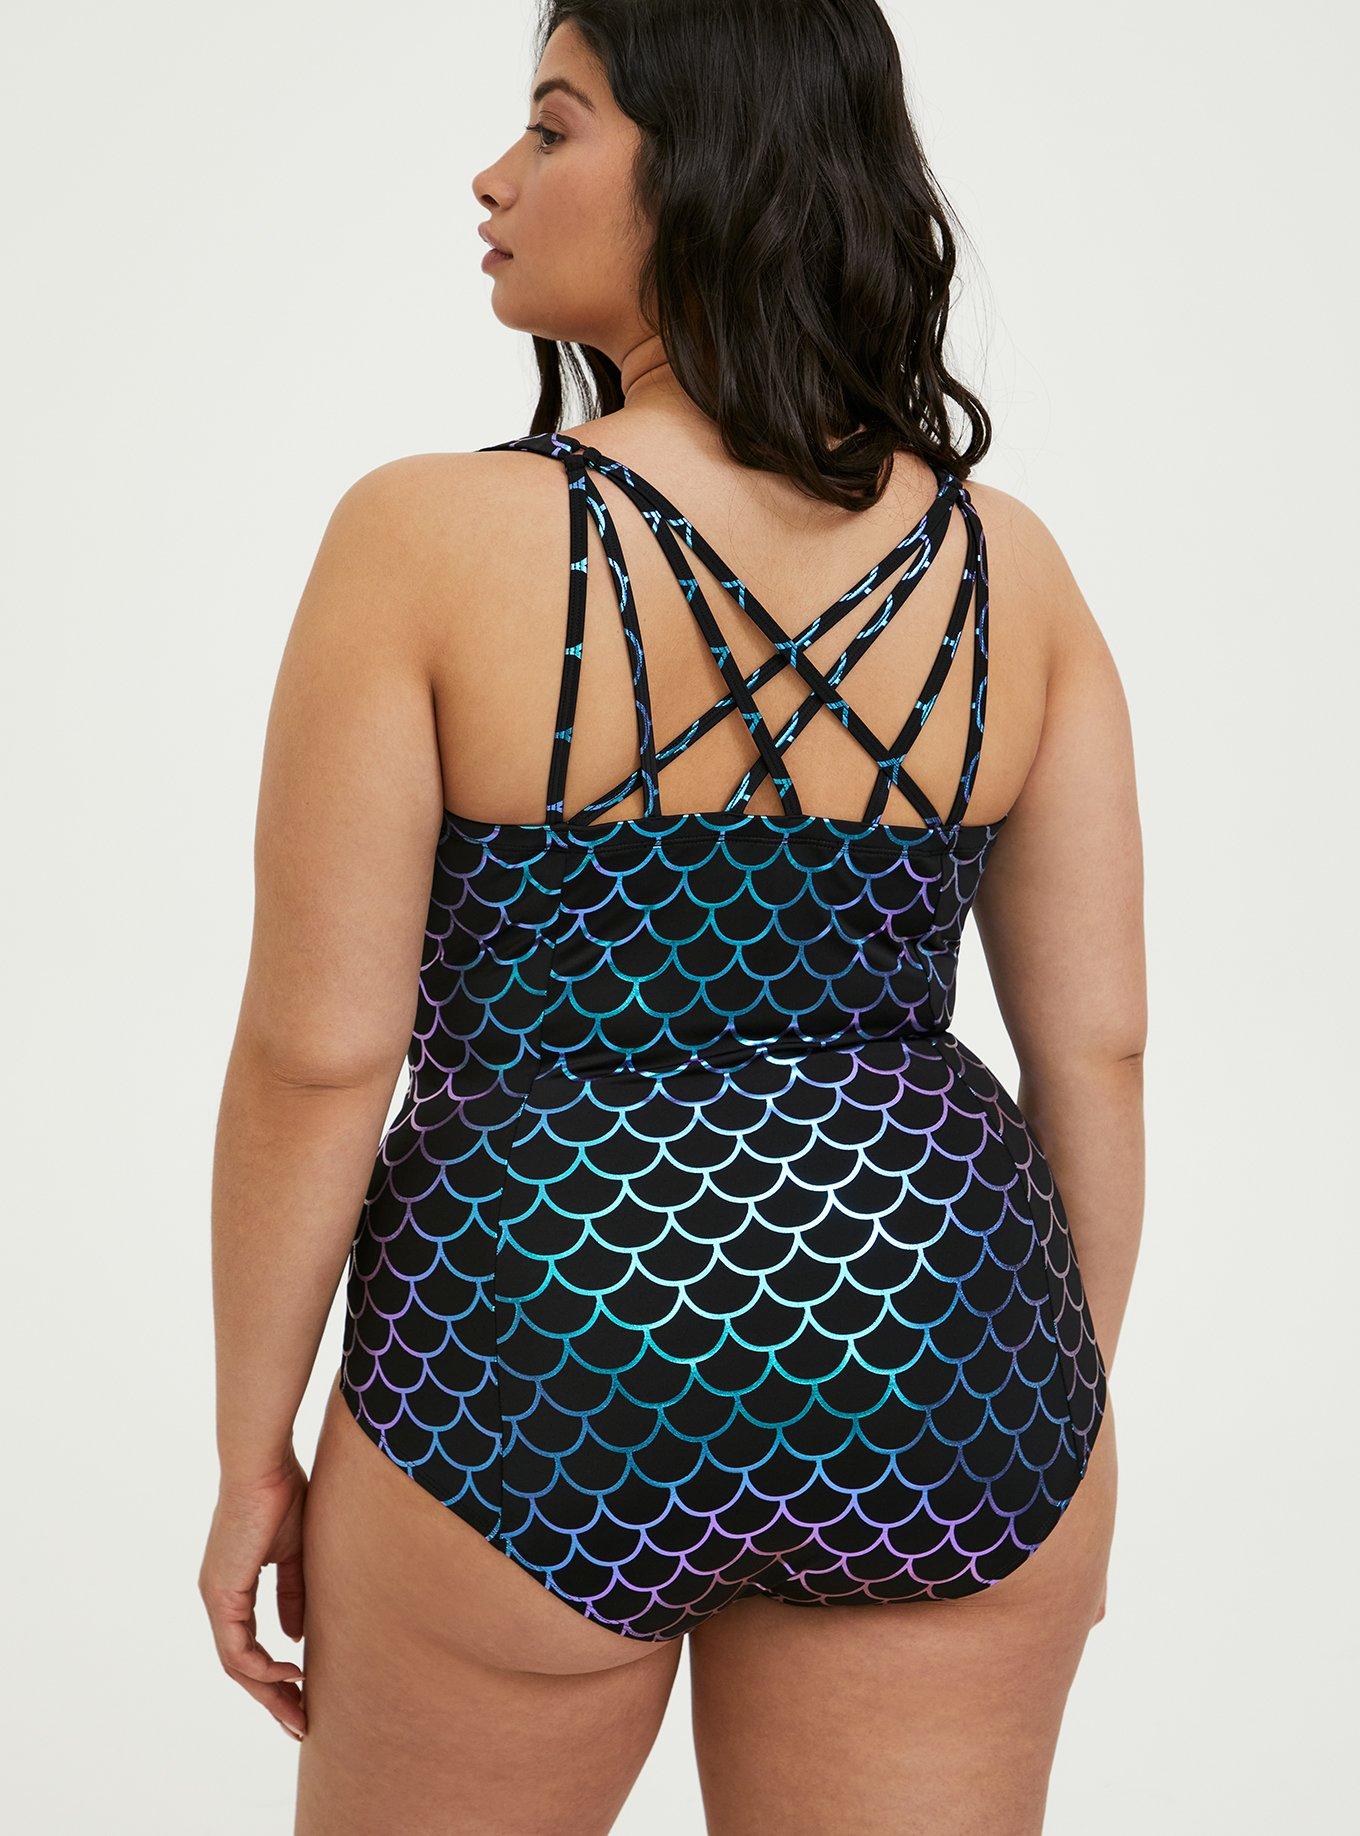 Plus Size - Black Lace Push-Up Strapless One-Piece Swimsuit - Torrid